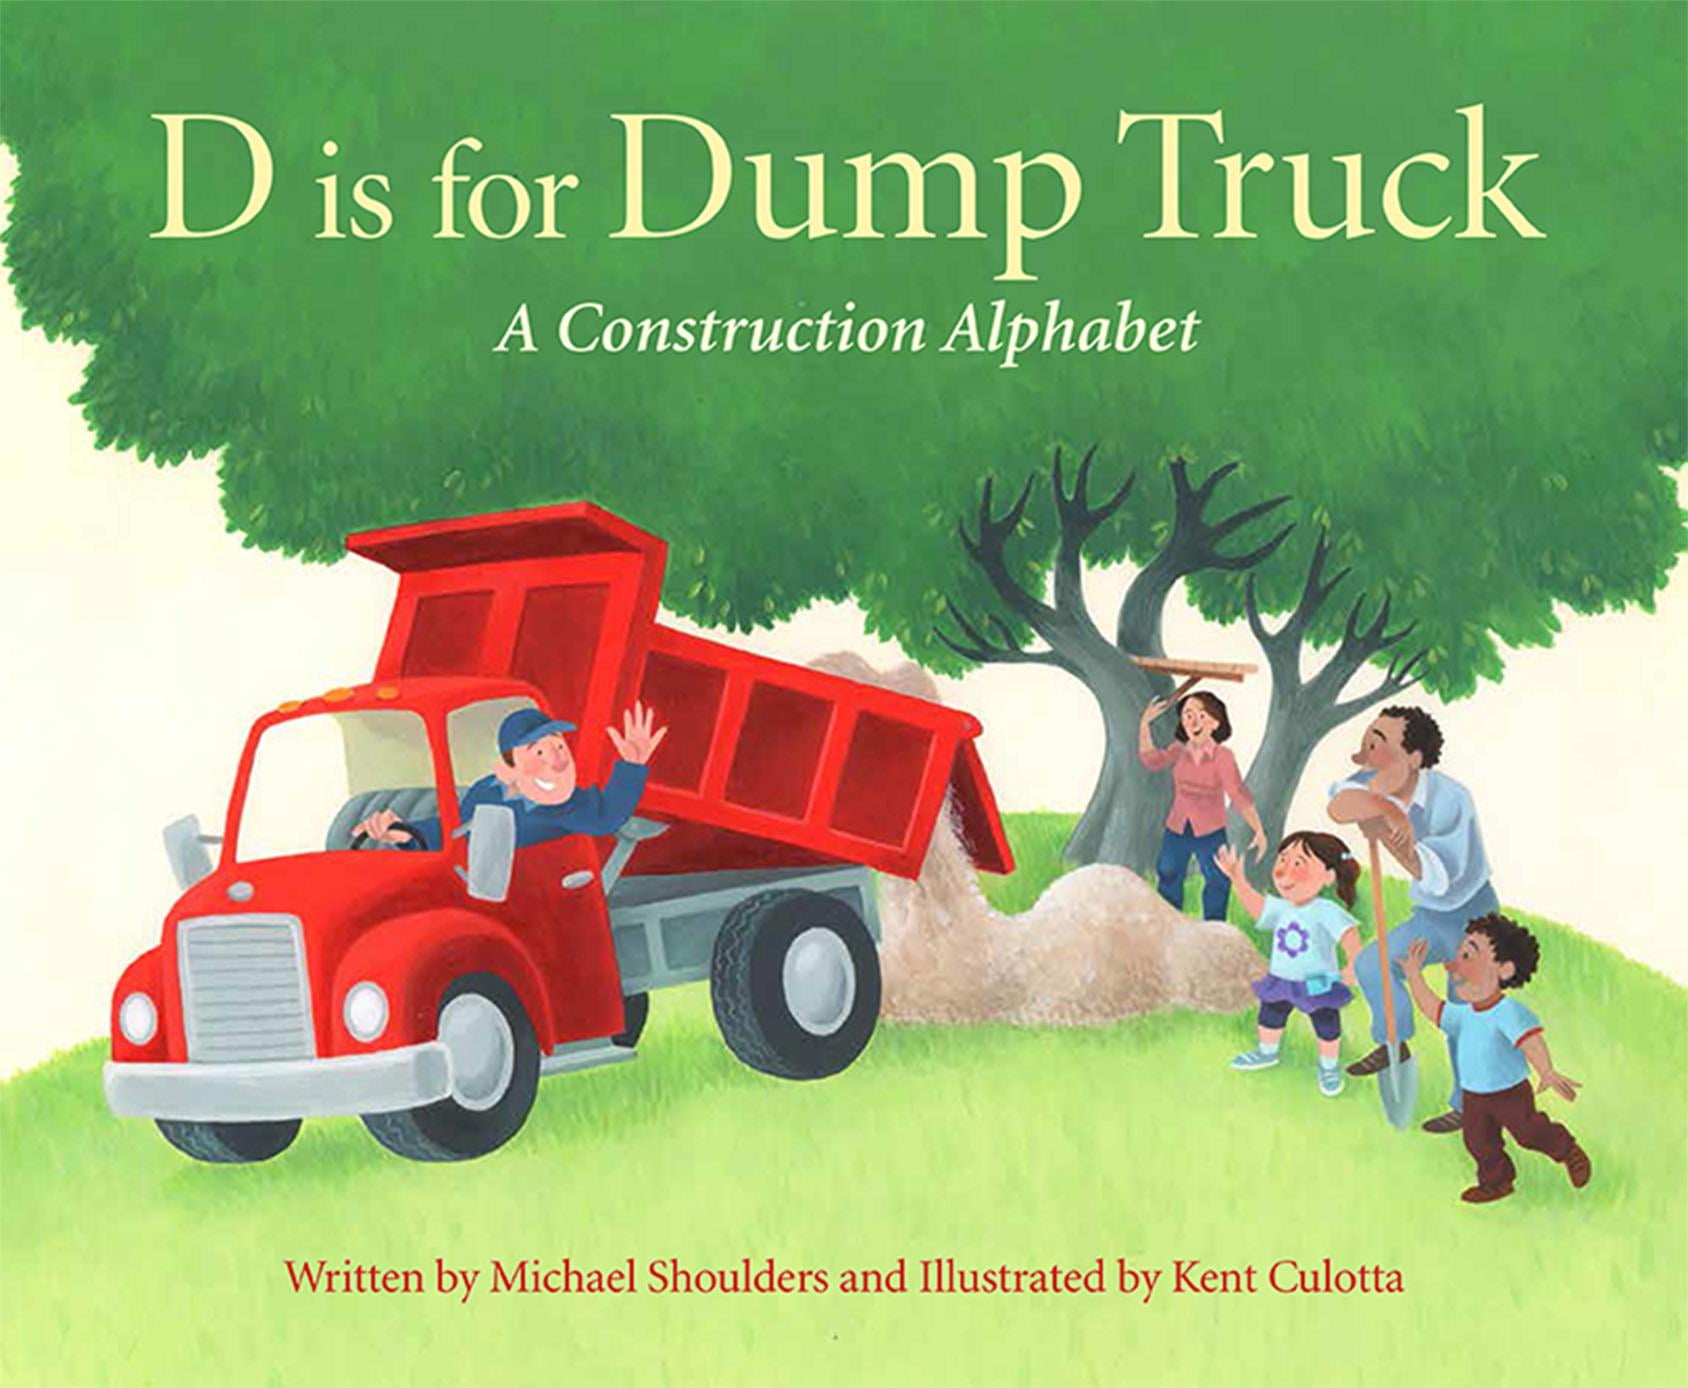 D Is for Dump Truck : A Construction Alphabet (Board book) - Walmart.com - Walmart.com